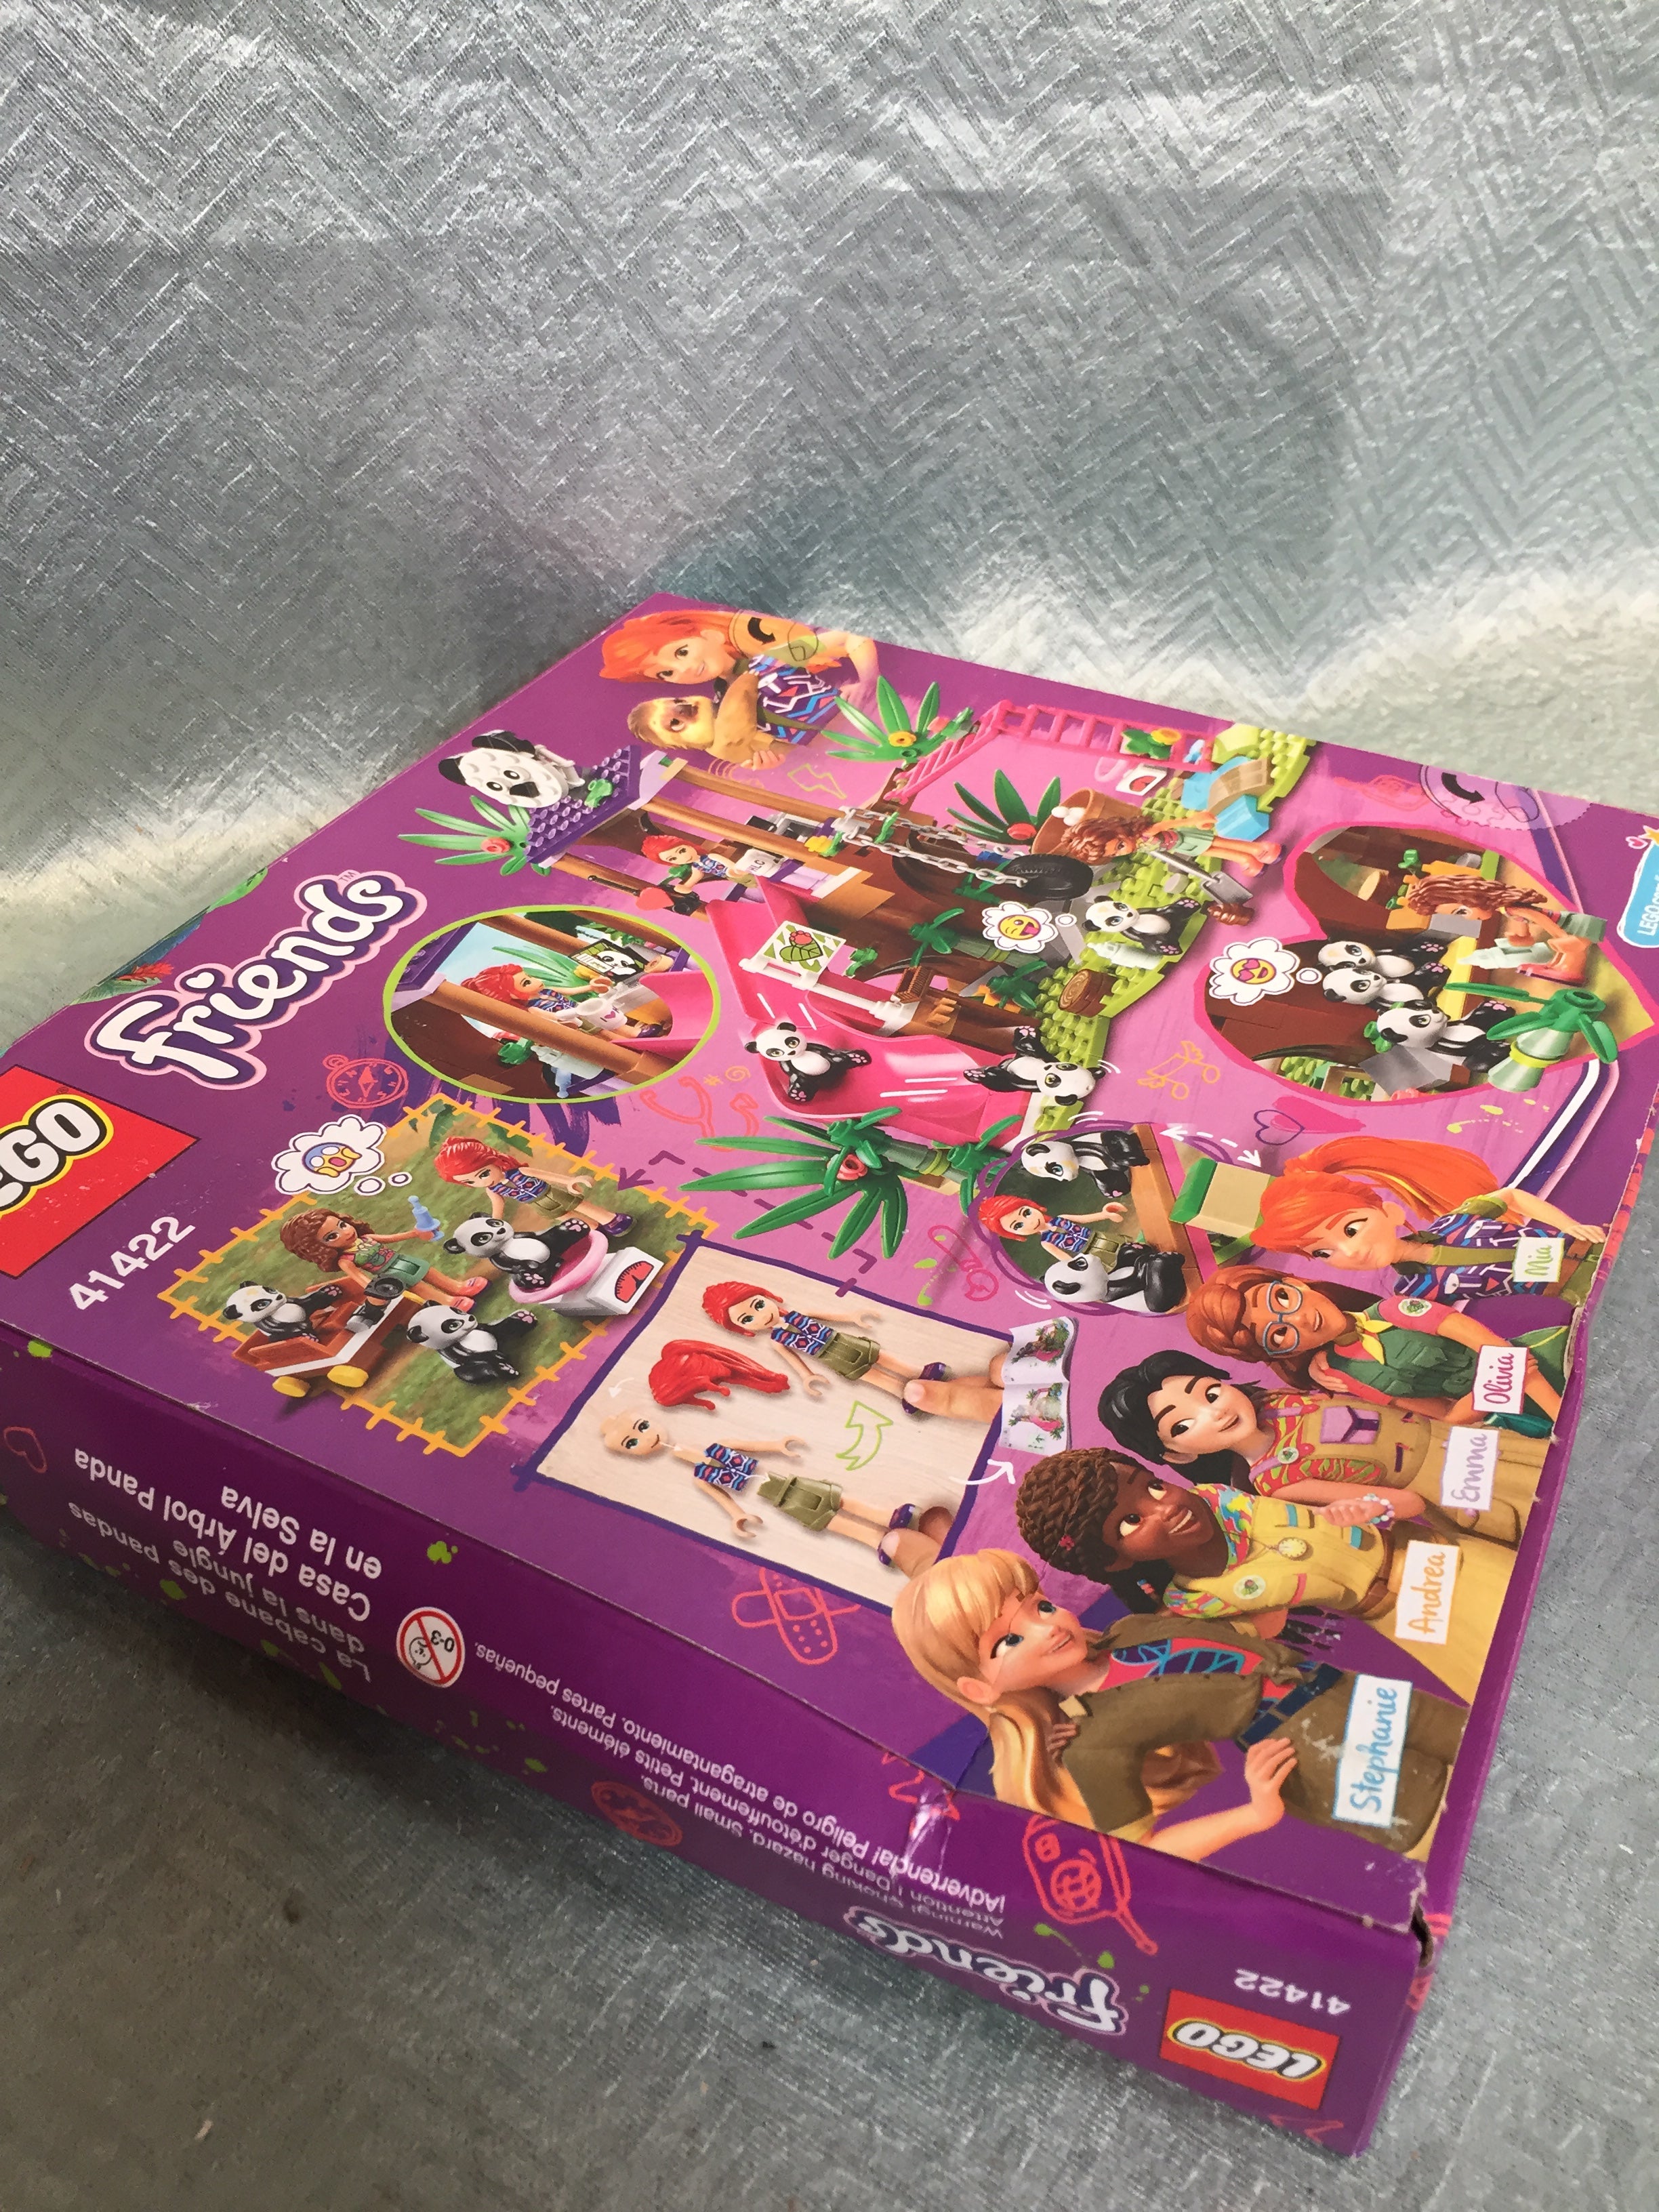 LEGO Friends Panda Jungle Tree House 41422 - 265 Pieces - SEALED (7614854856942)